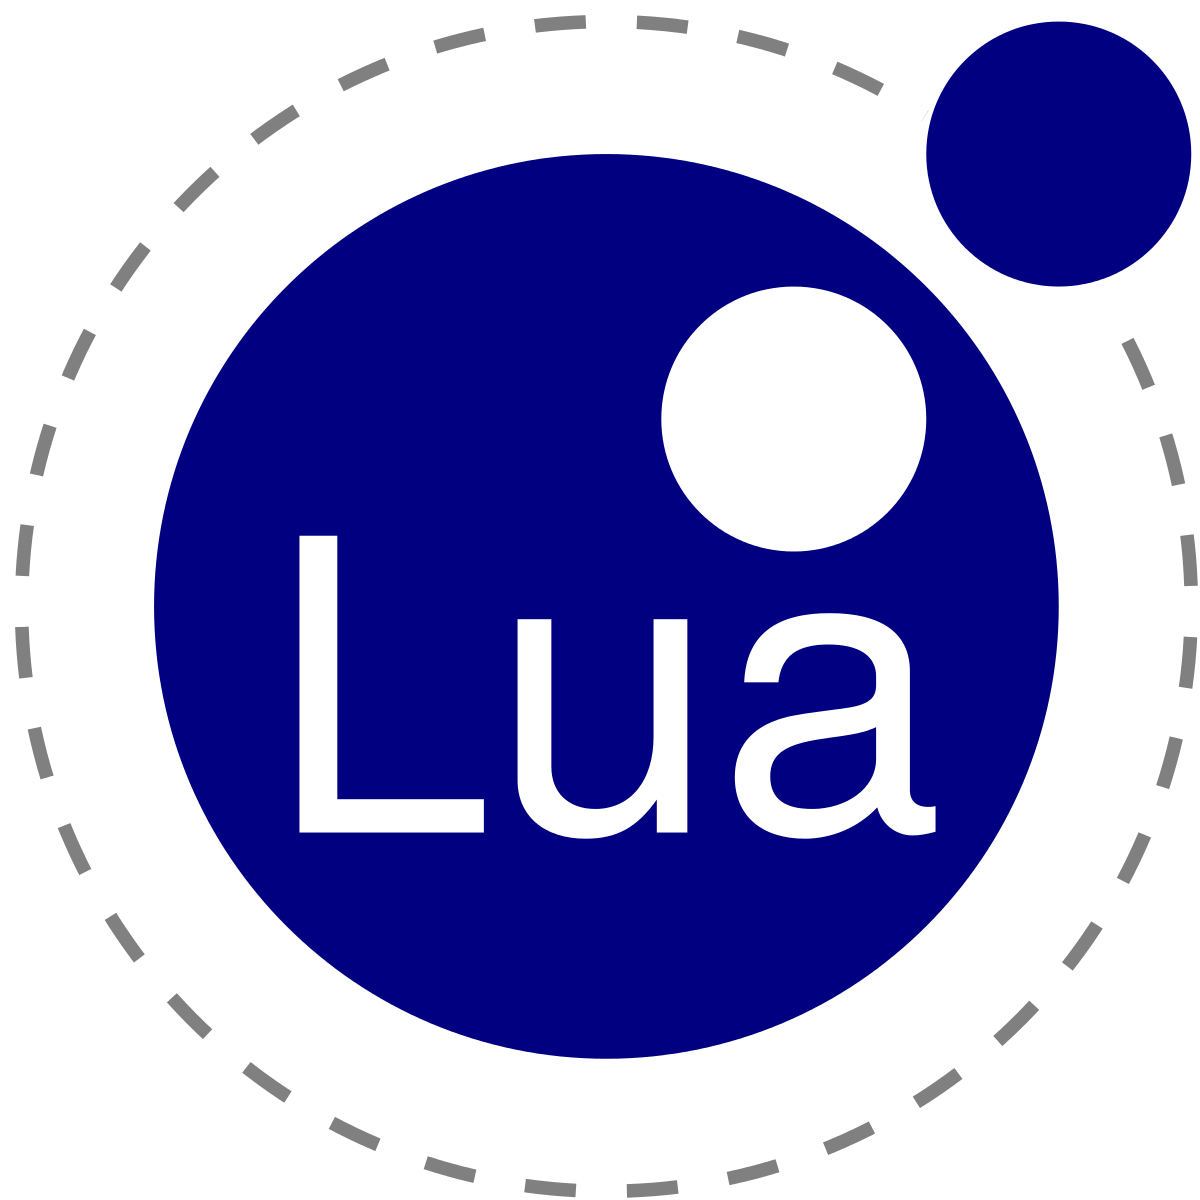 Red Lua Logo - Lua (programming language)